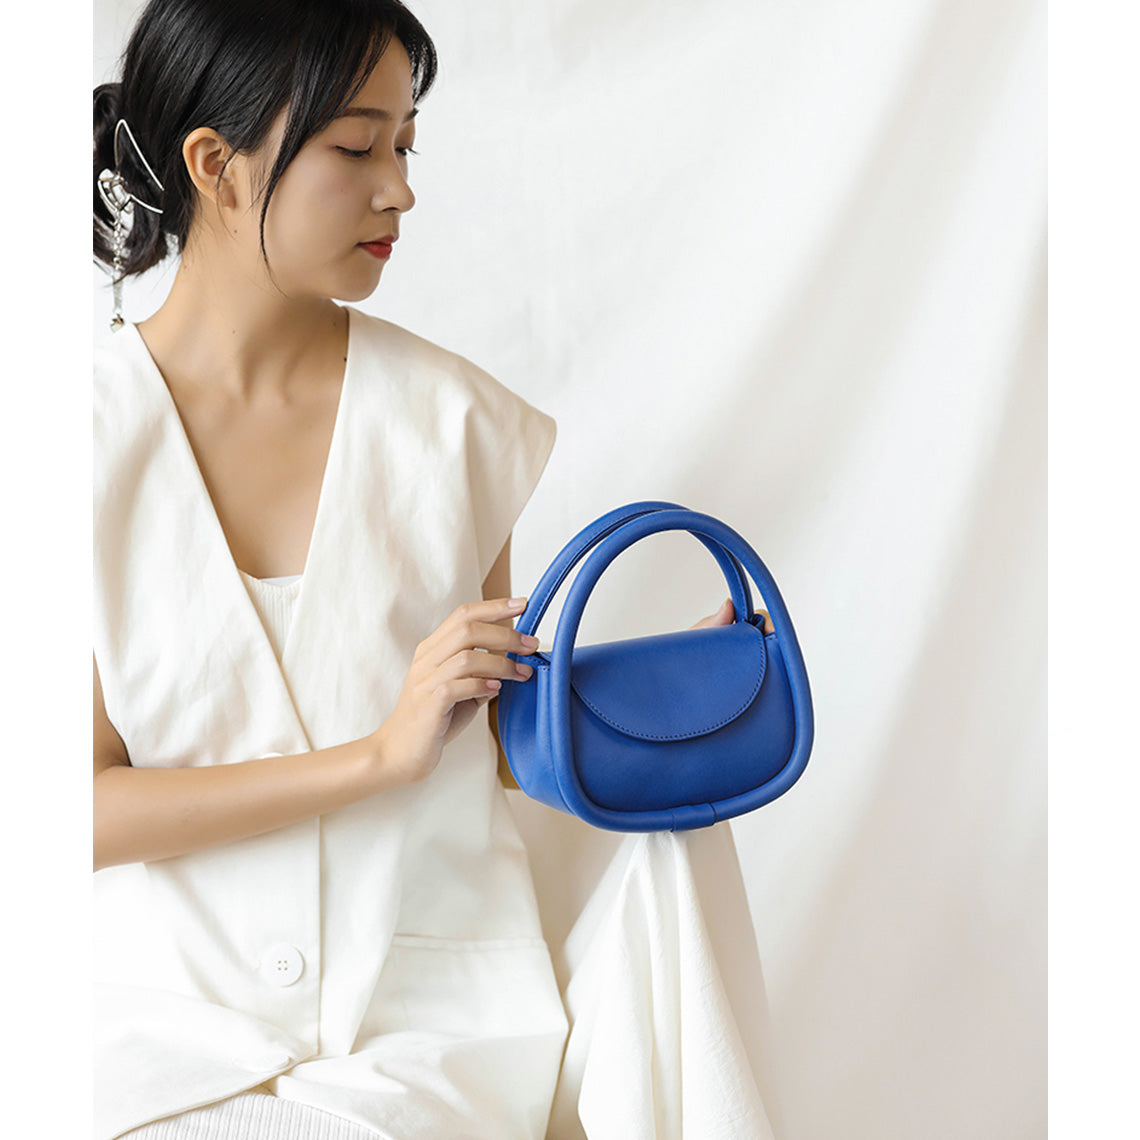 Handsewn Mini Fashion Hobo Handbag Blue - POPSEWING™